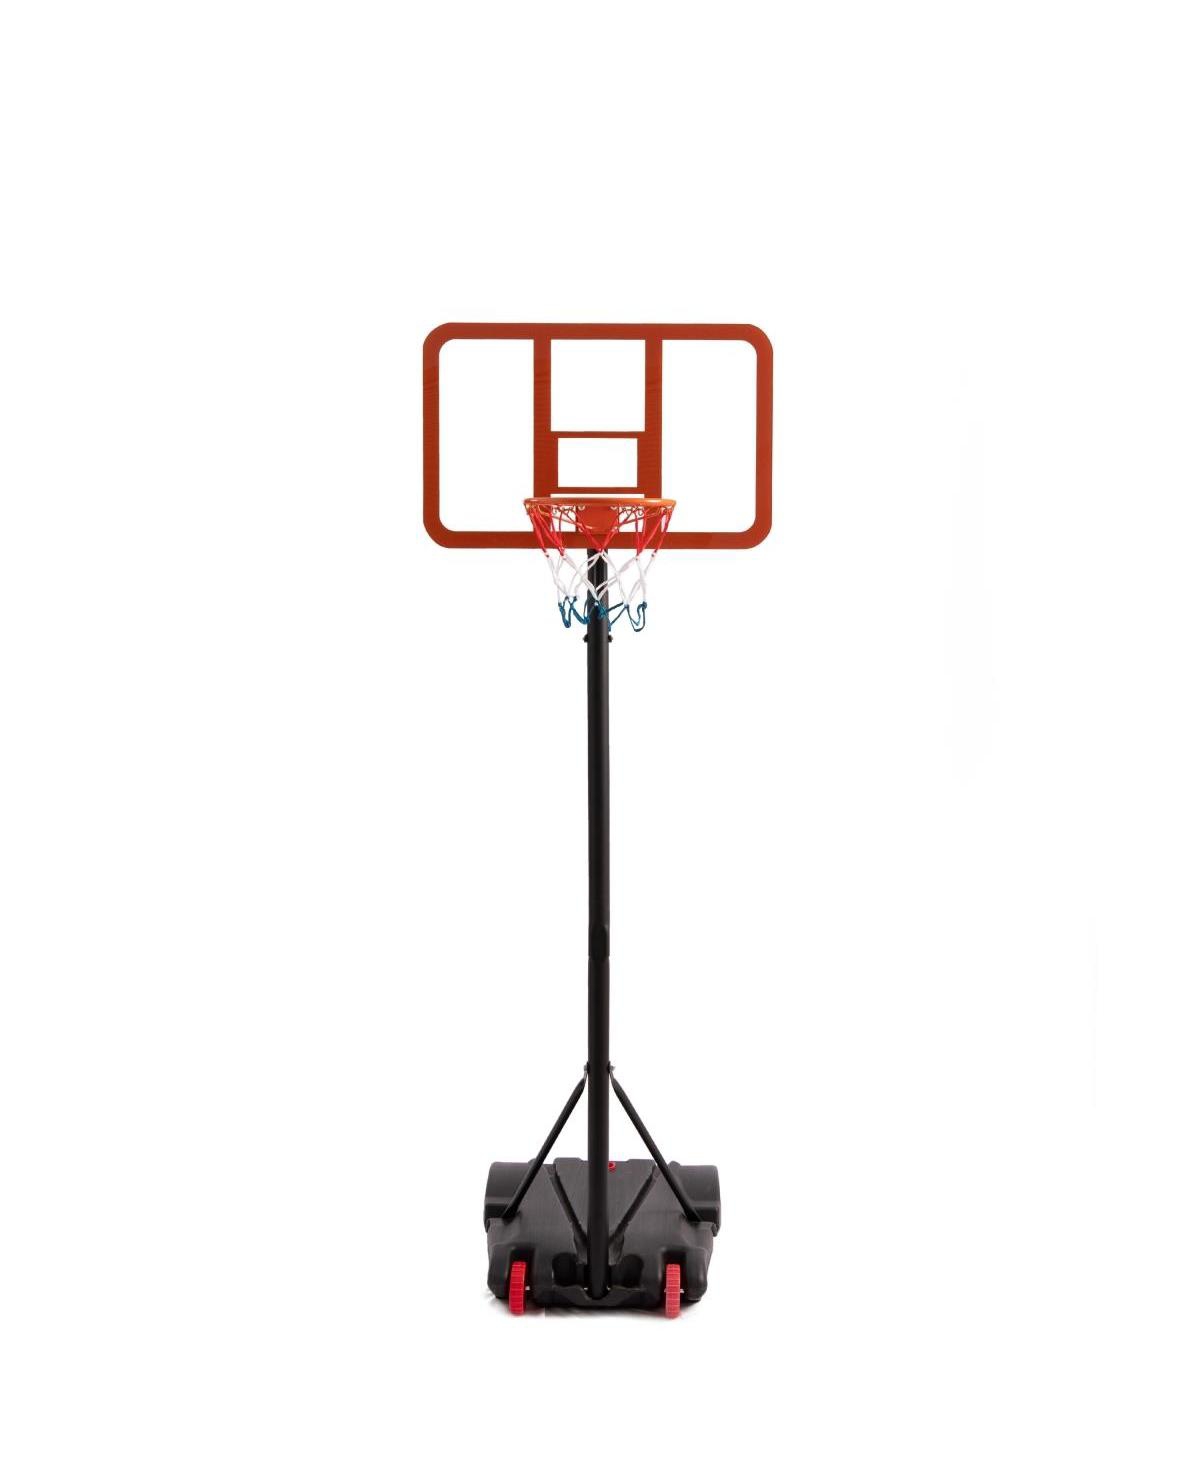 Top Shot Portable Basketball System - Open miscellaneous